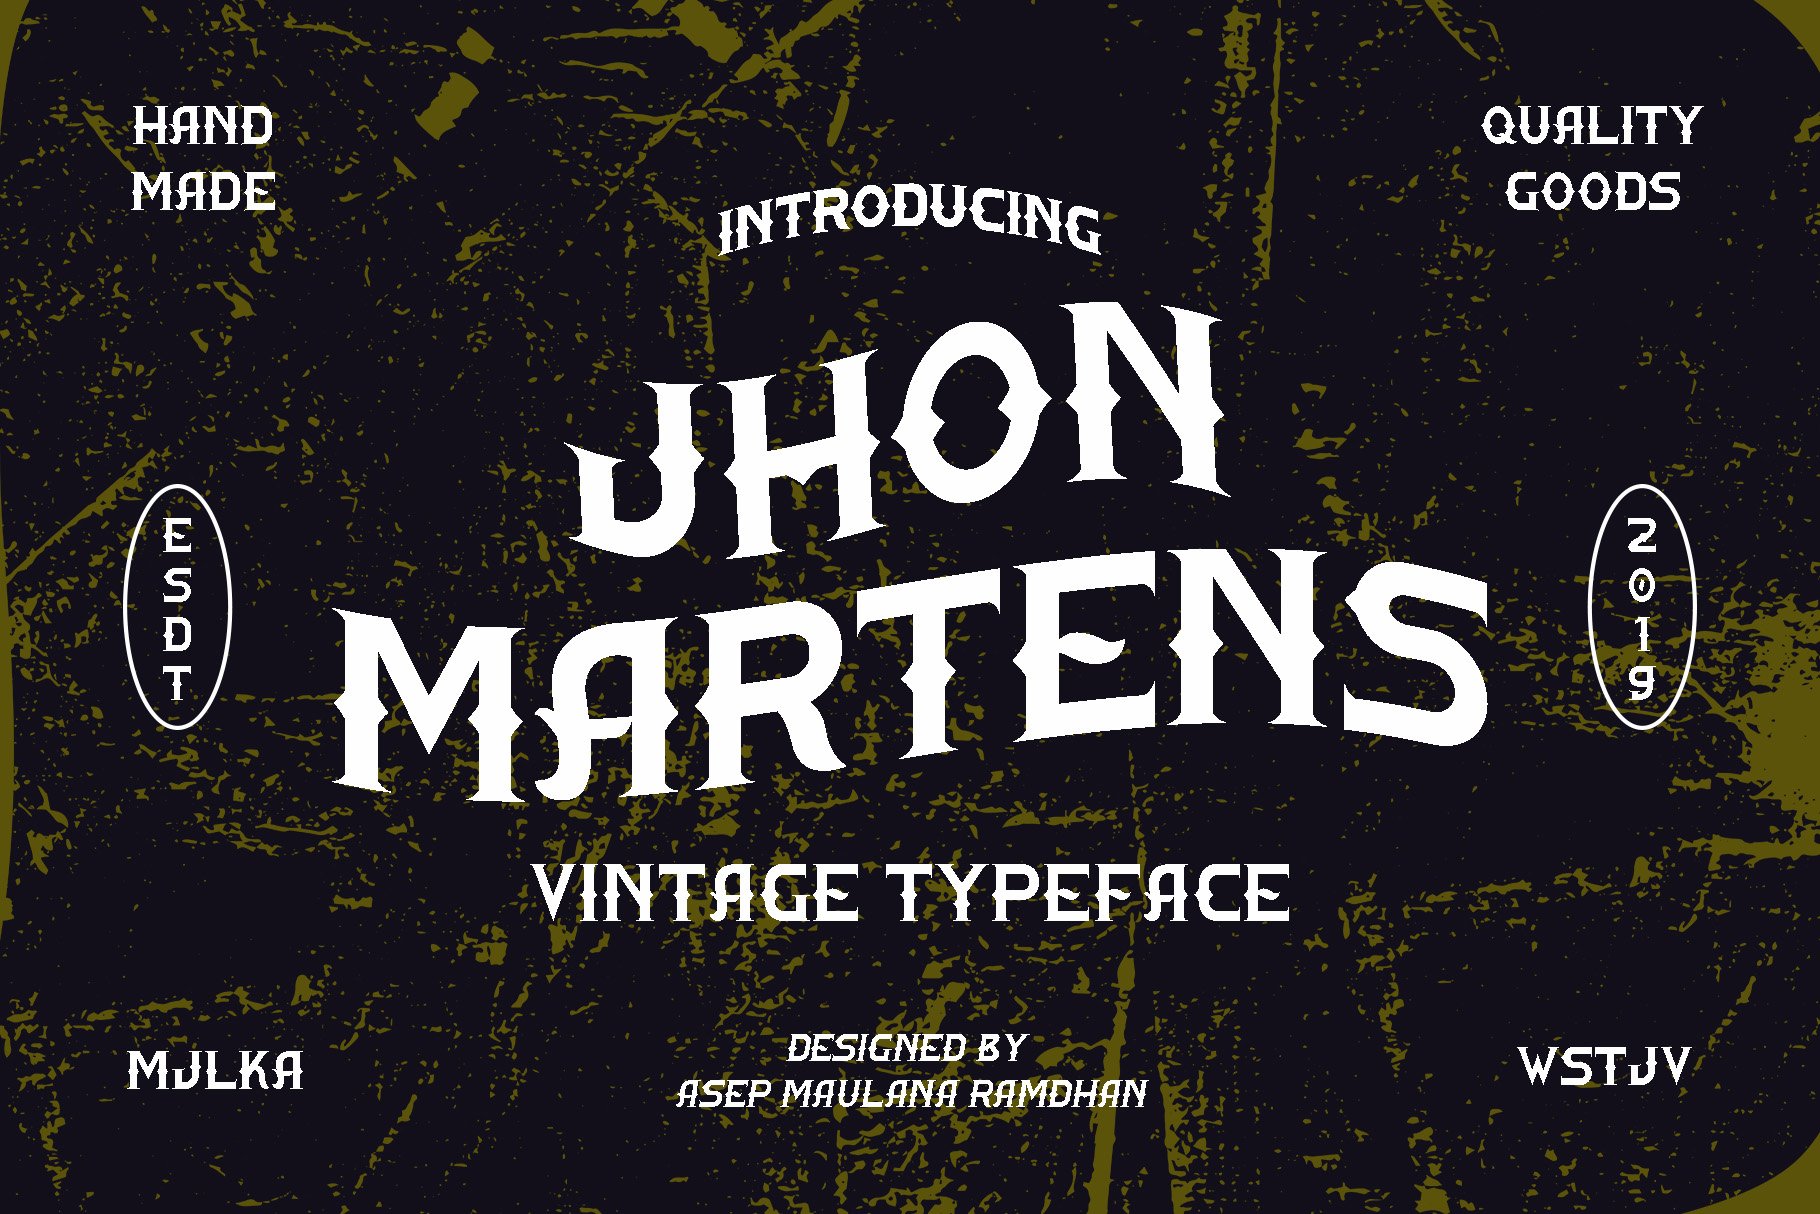 Jhon Martens Vintage Typeface cover image.